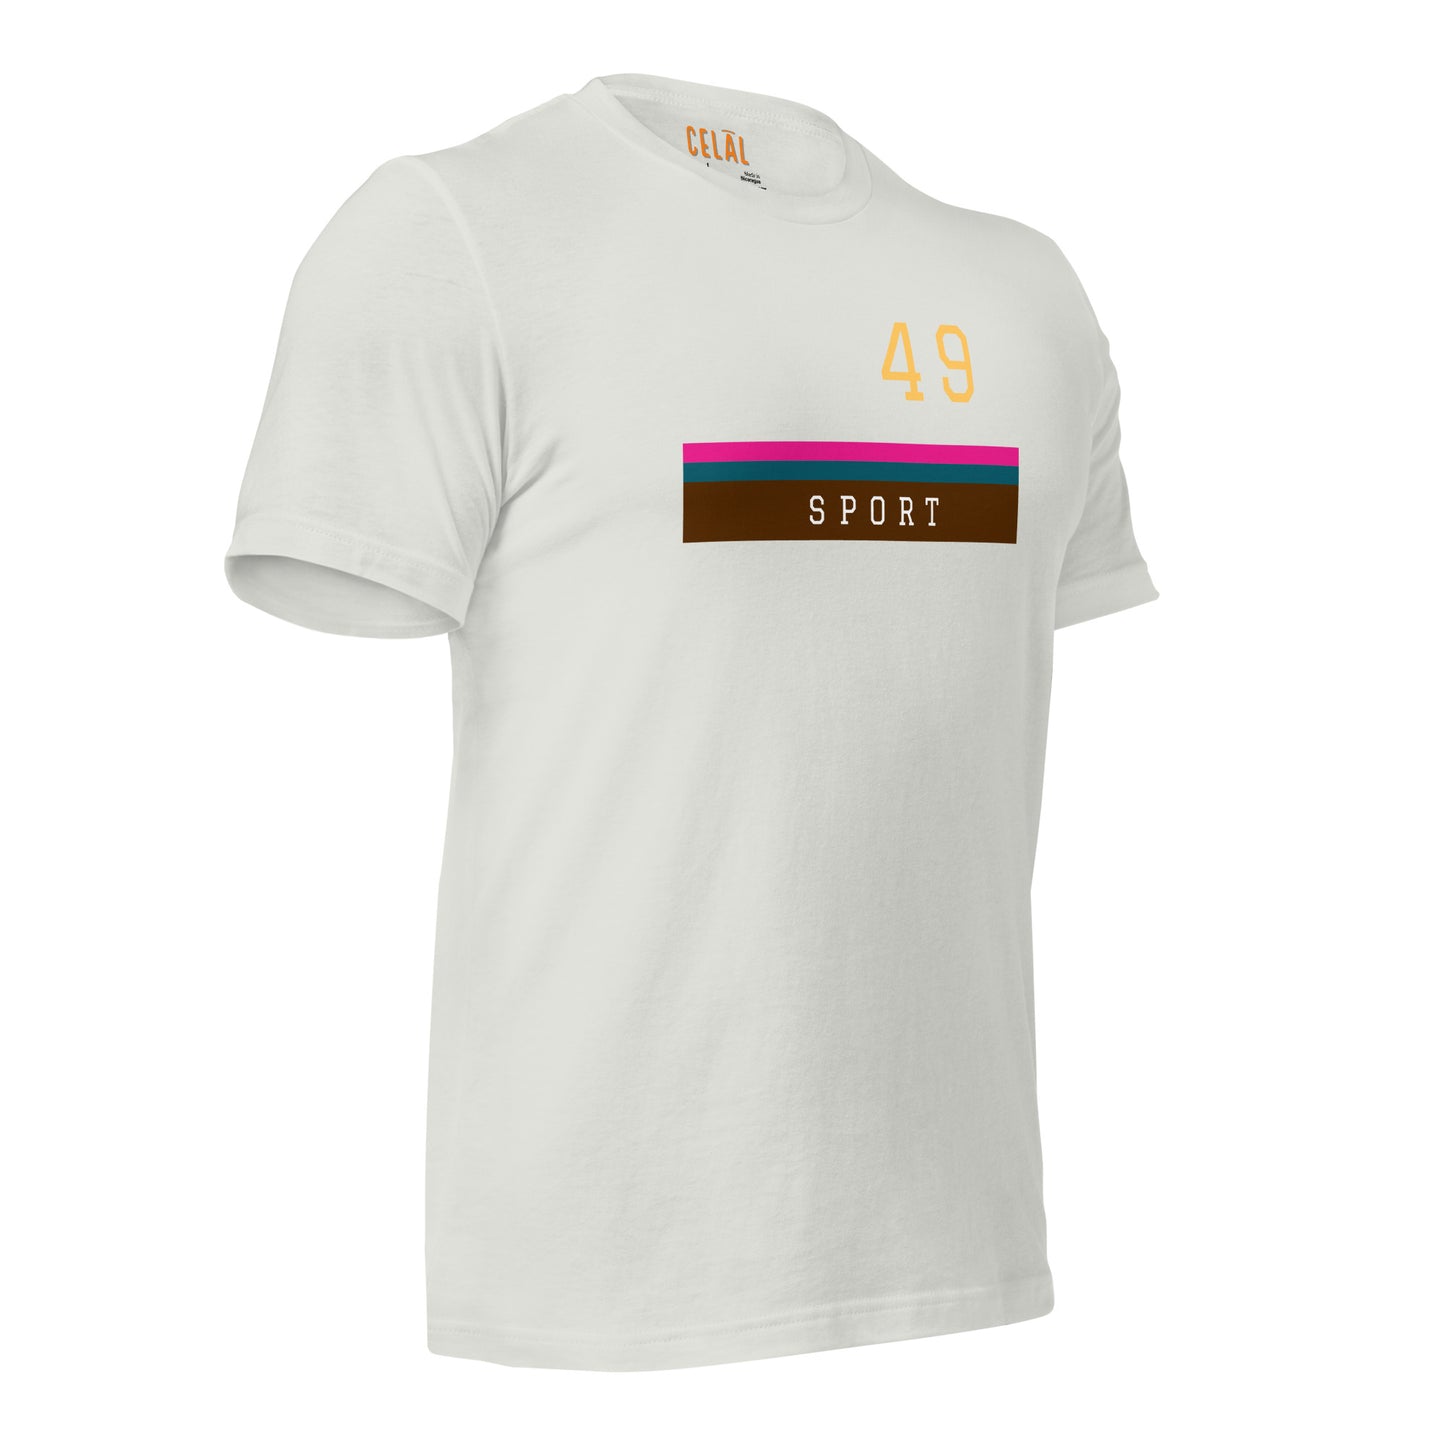 49 Unisex t-shirt